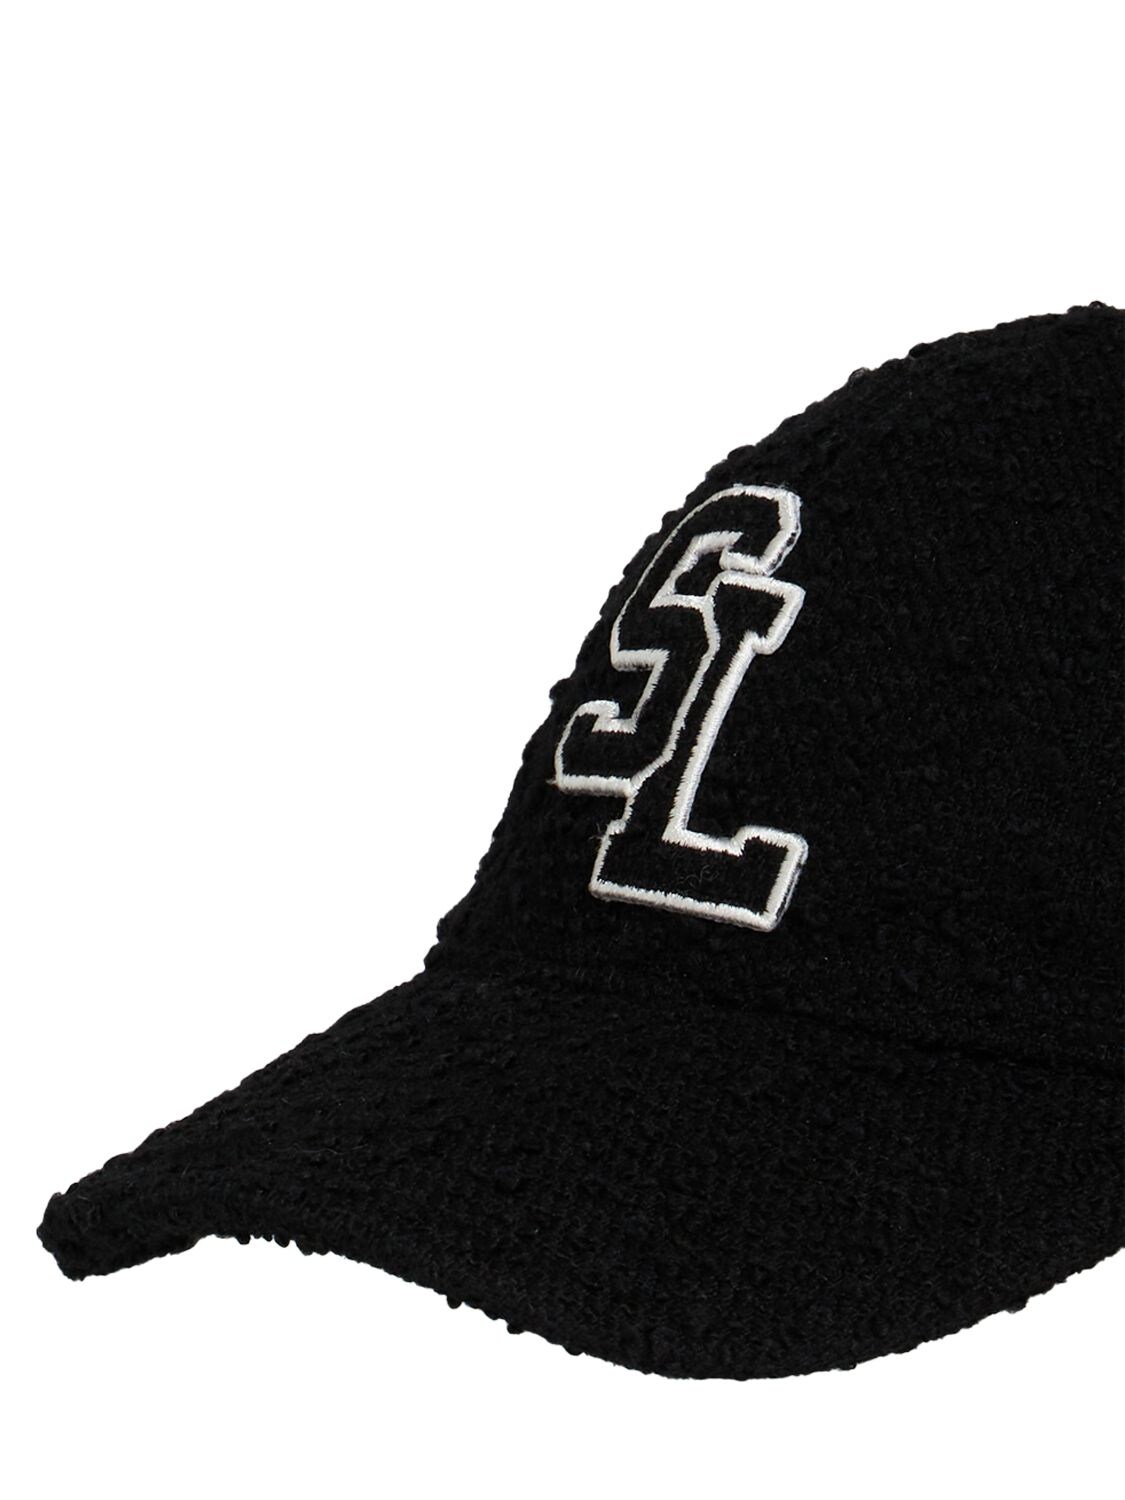 New Era YSL Monogram Cap Black (Myrtle Beach Location) – RondevuNC